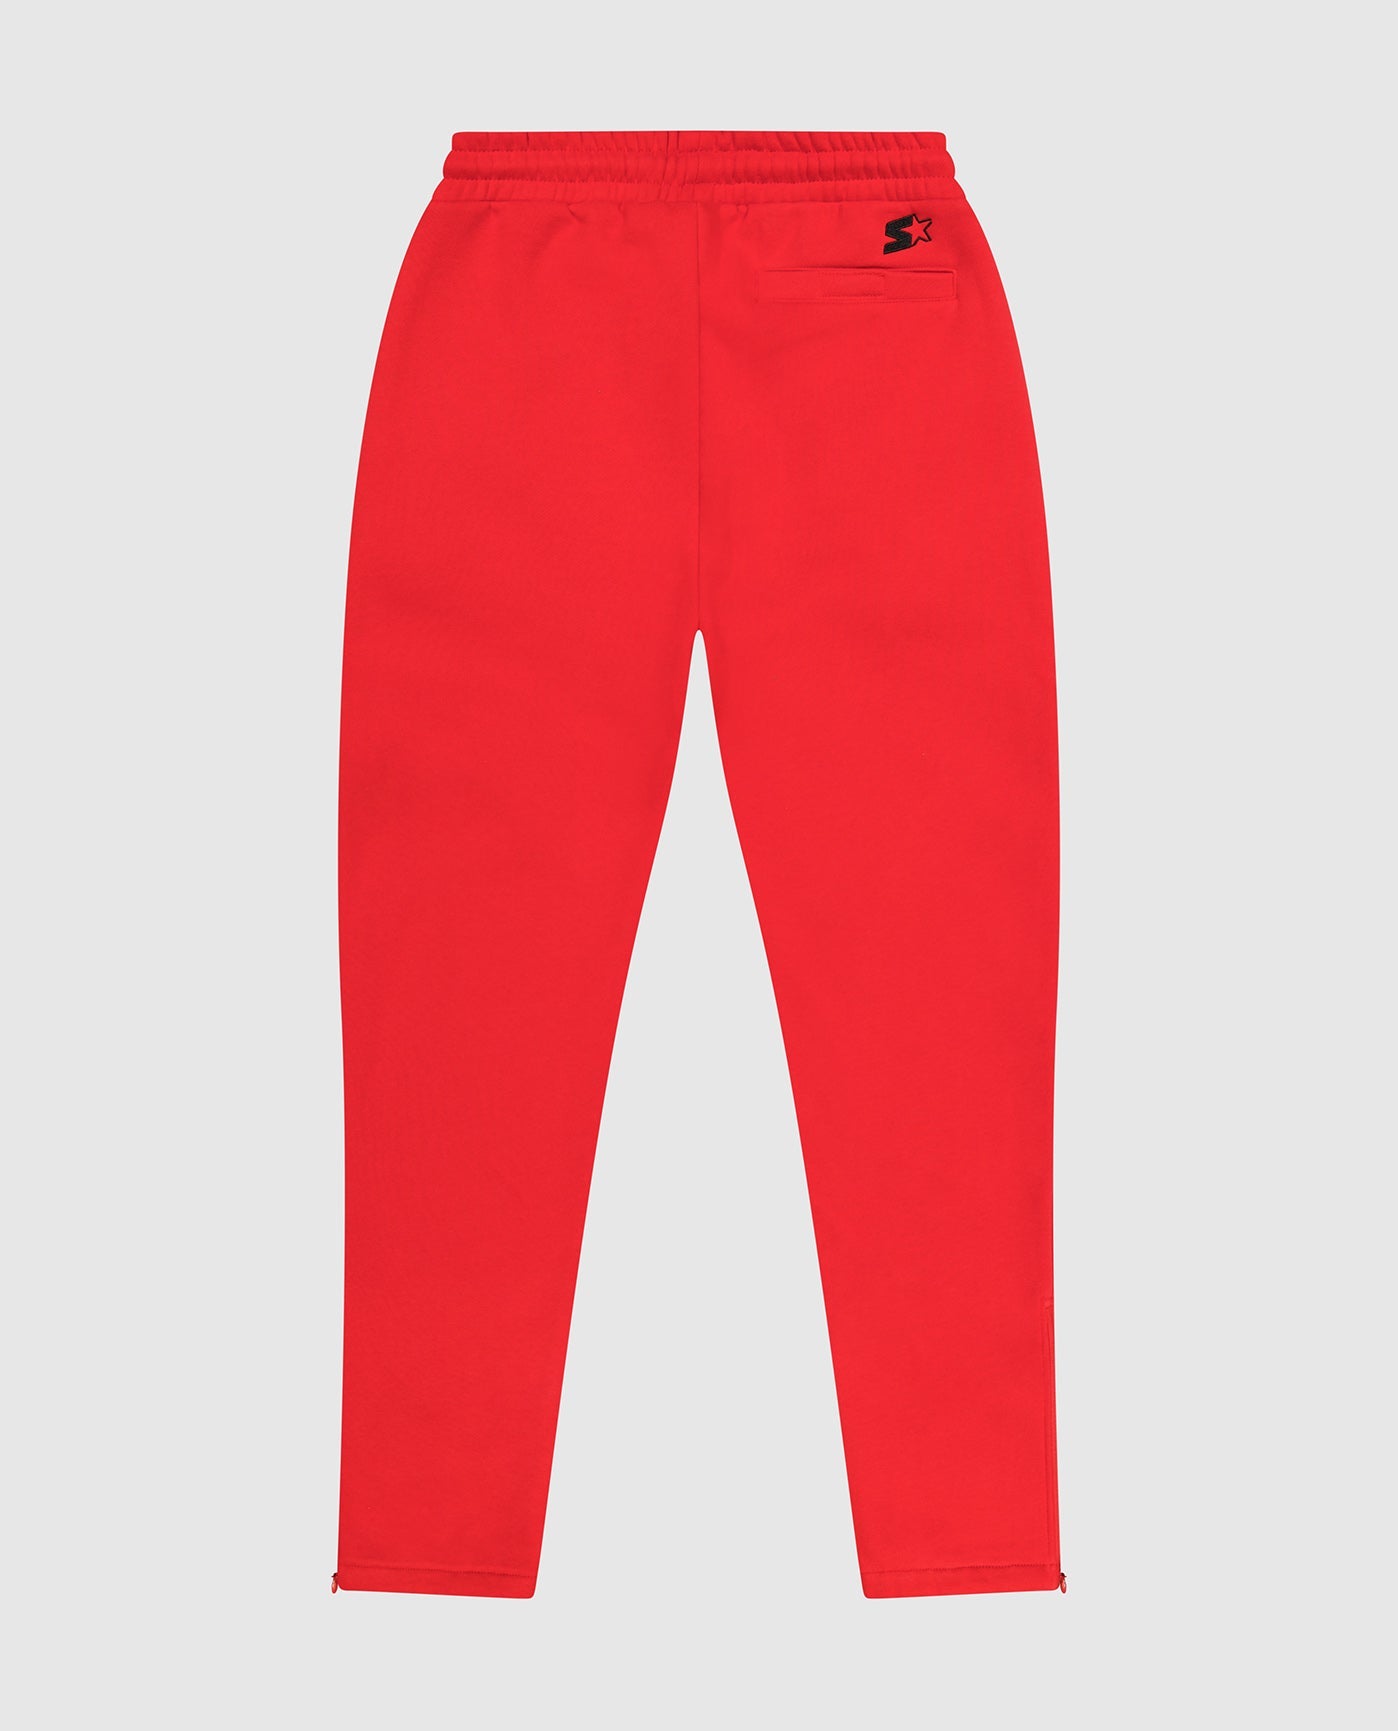 Back of Atlanta Falcons Sweatpants | Falcons Red